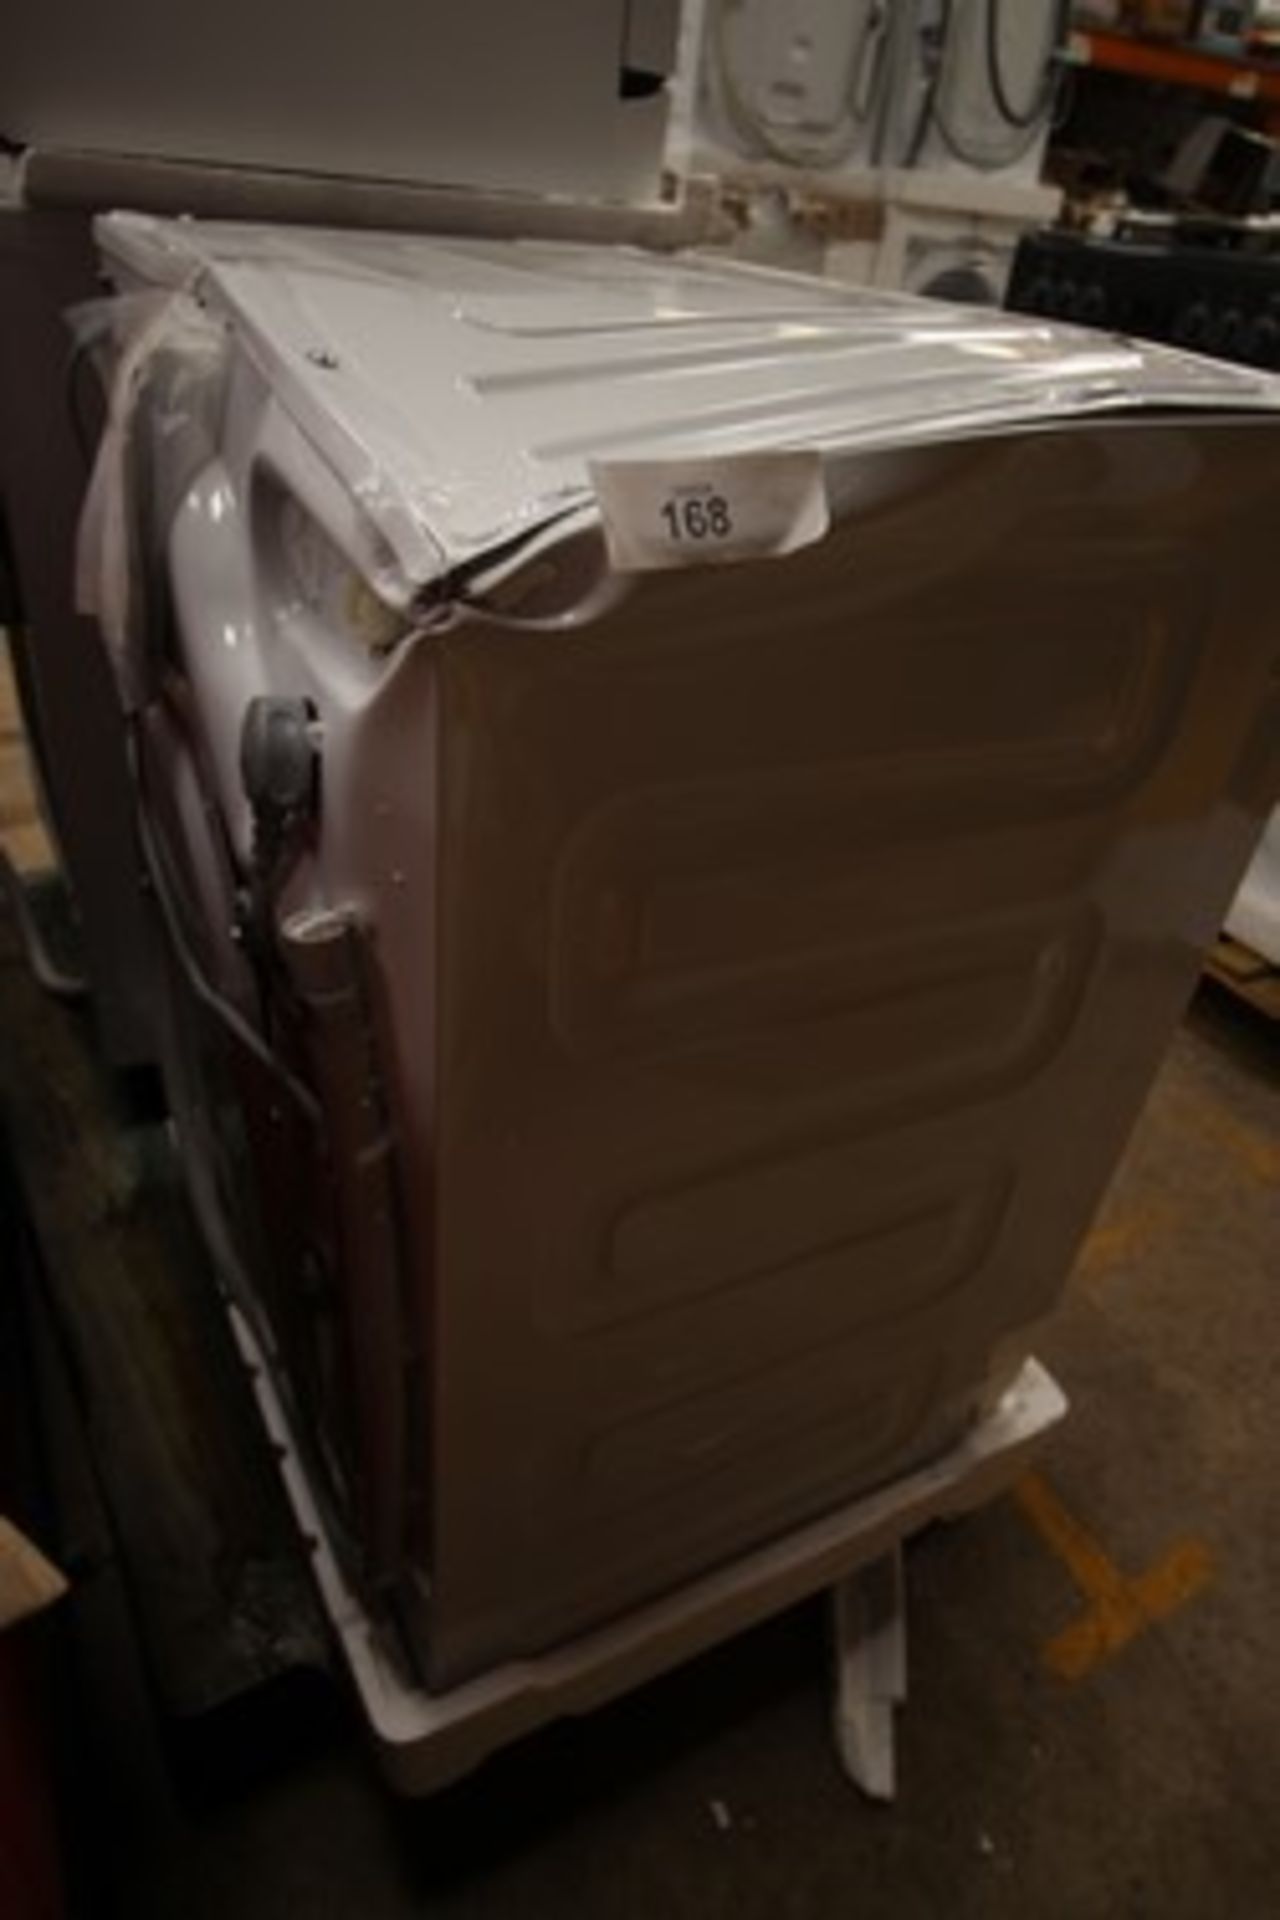 1 x Beko 7kg built in washing machine, Model WTIK74151F - New (eBay 1) - Image 2 of 3